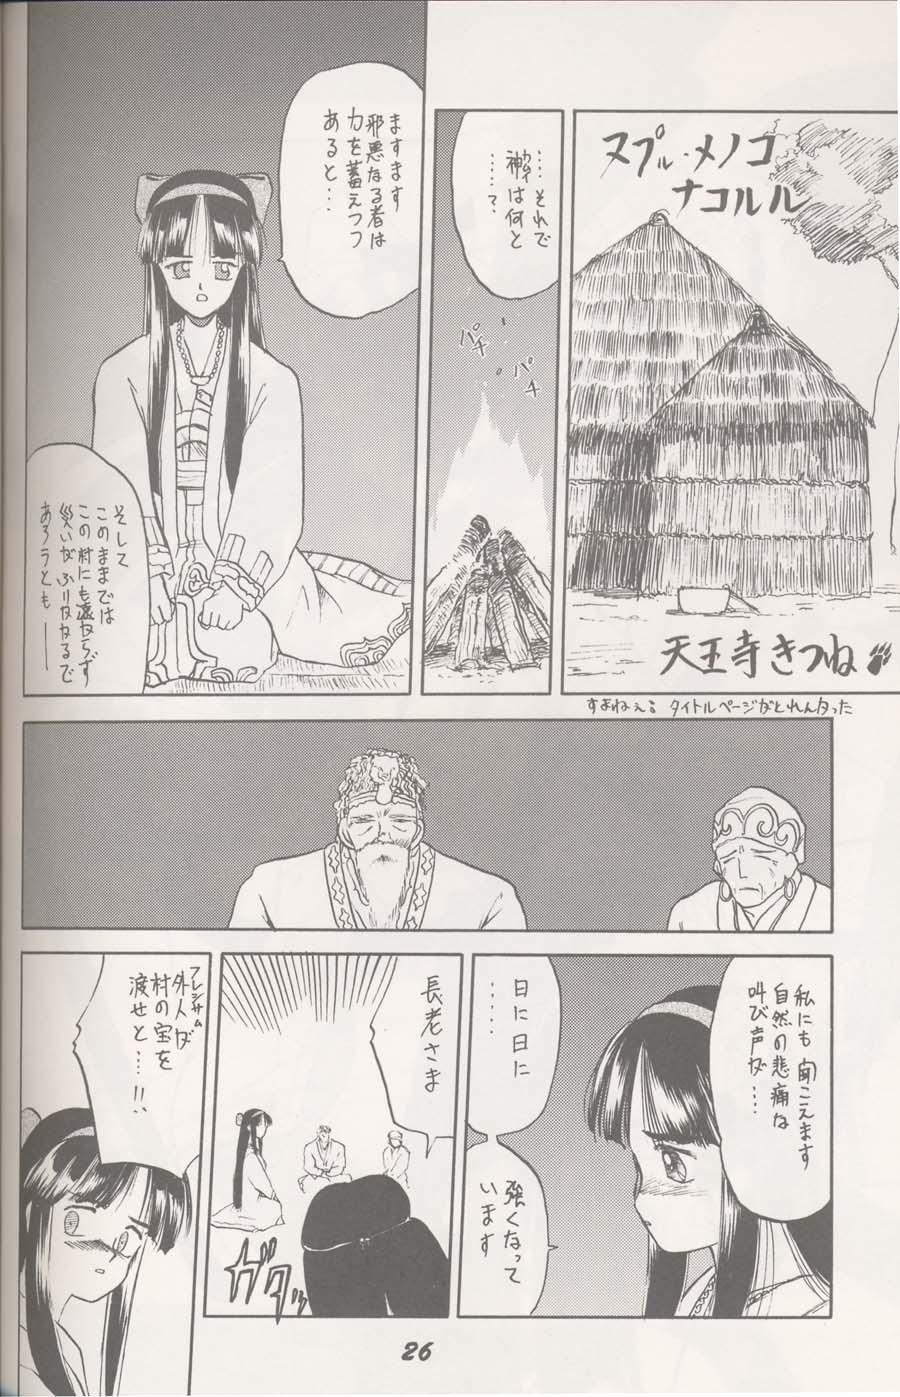 Peituda ヌプル メノコ ナコルル - Samurai spirits Handjobs - Page 1